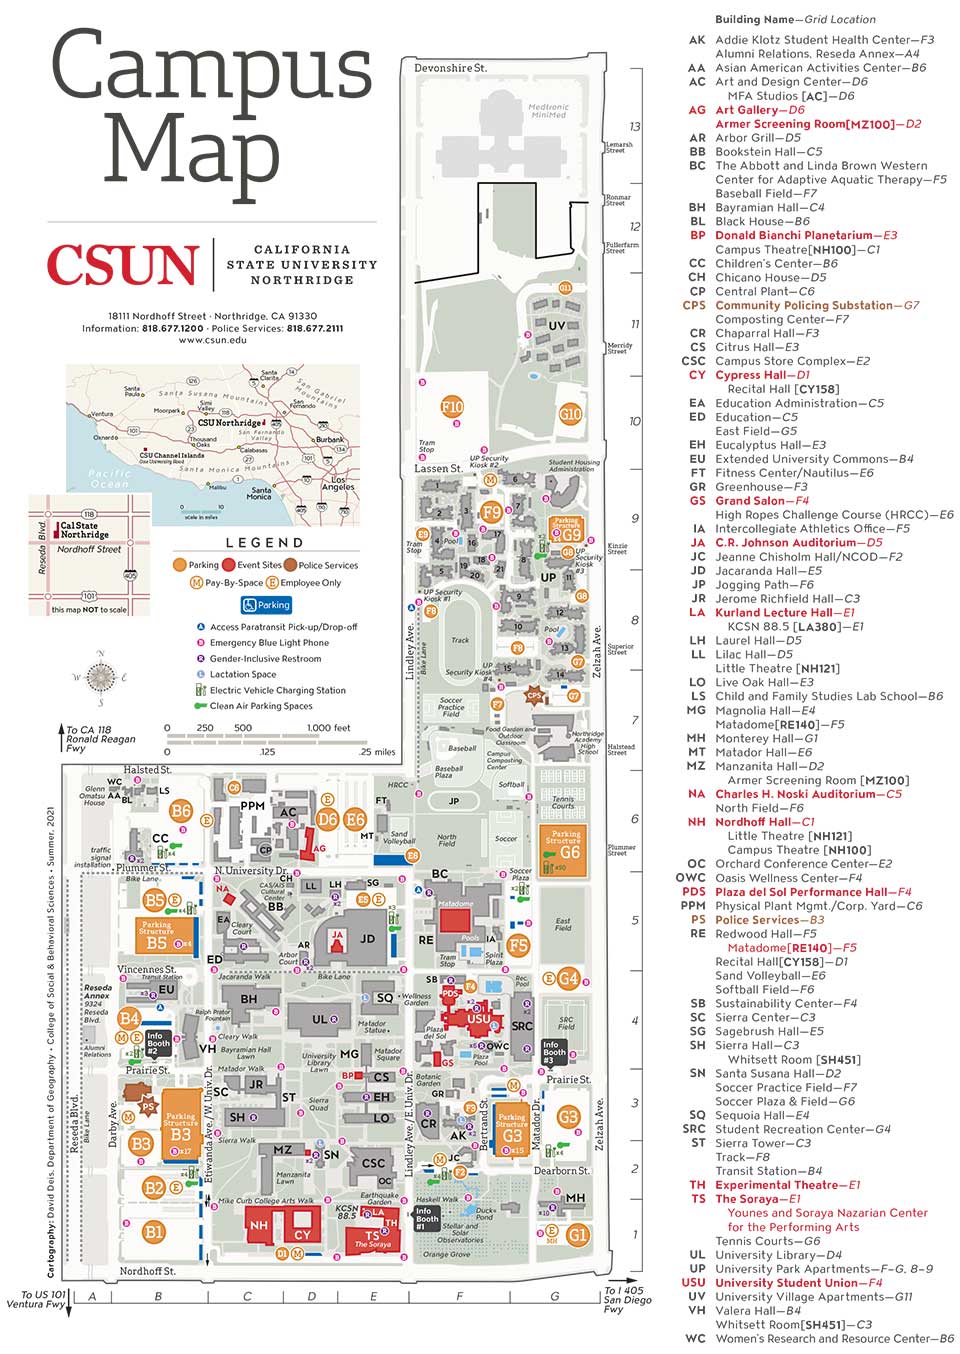 CSUN Maps California State University, Northridge